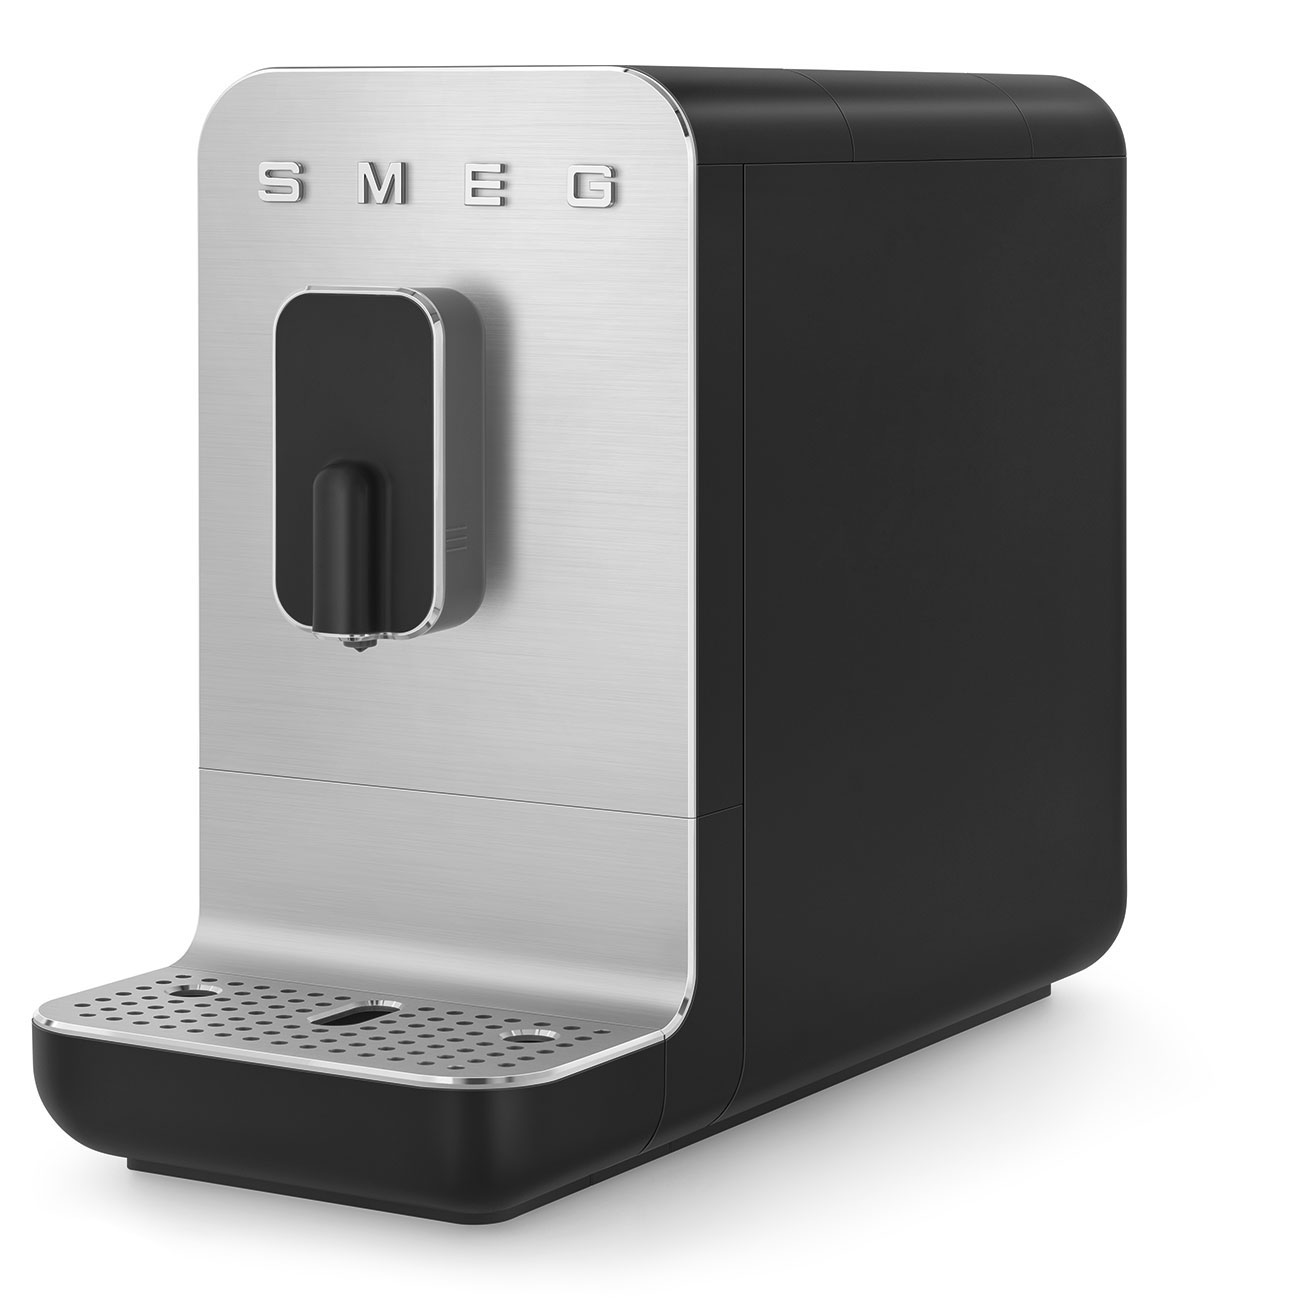 Machine à café Expresso SMEG avec broyeur intégré